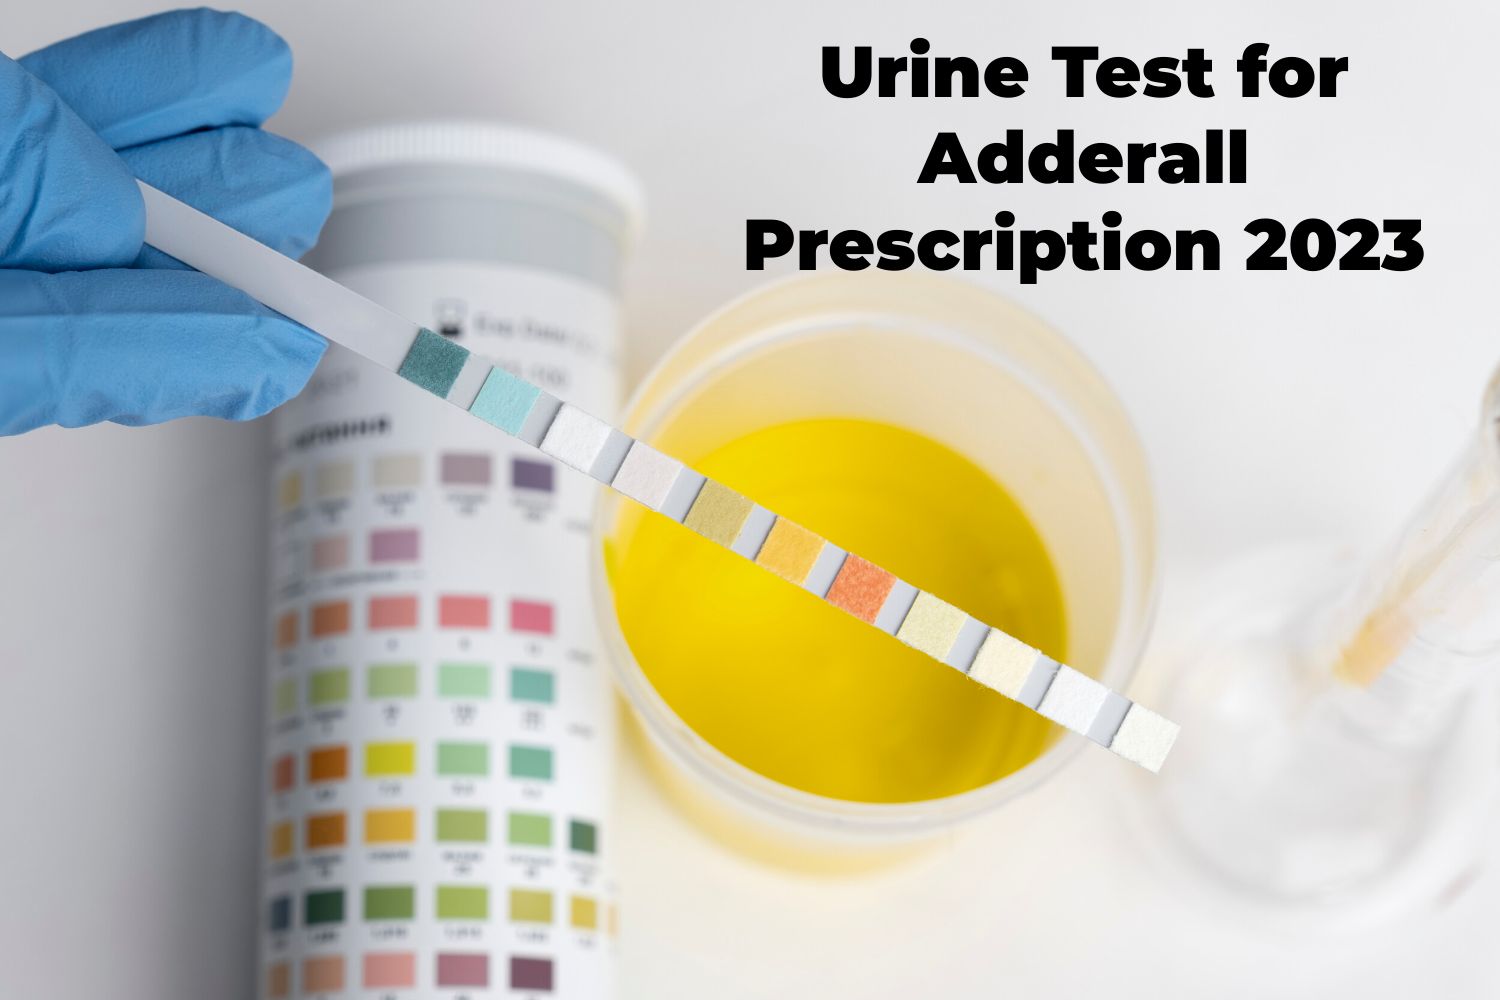 Urine Test for Adderall Prescription 2023